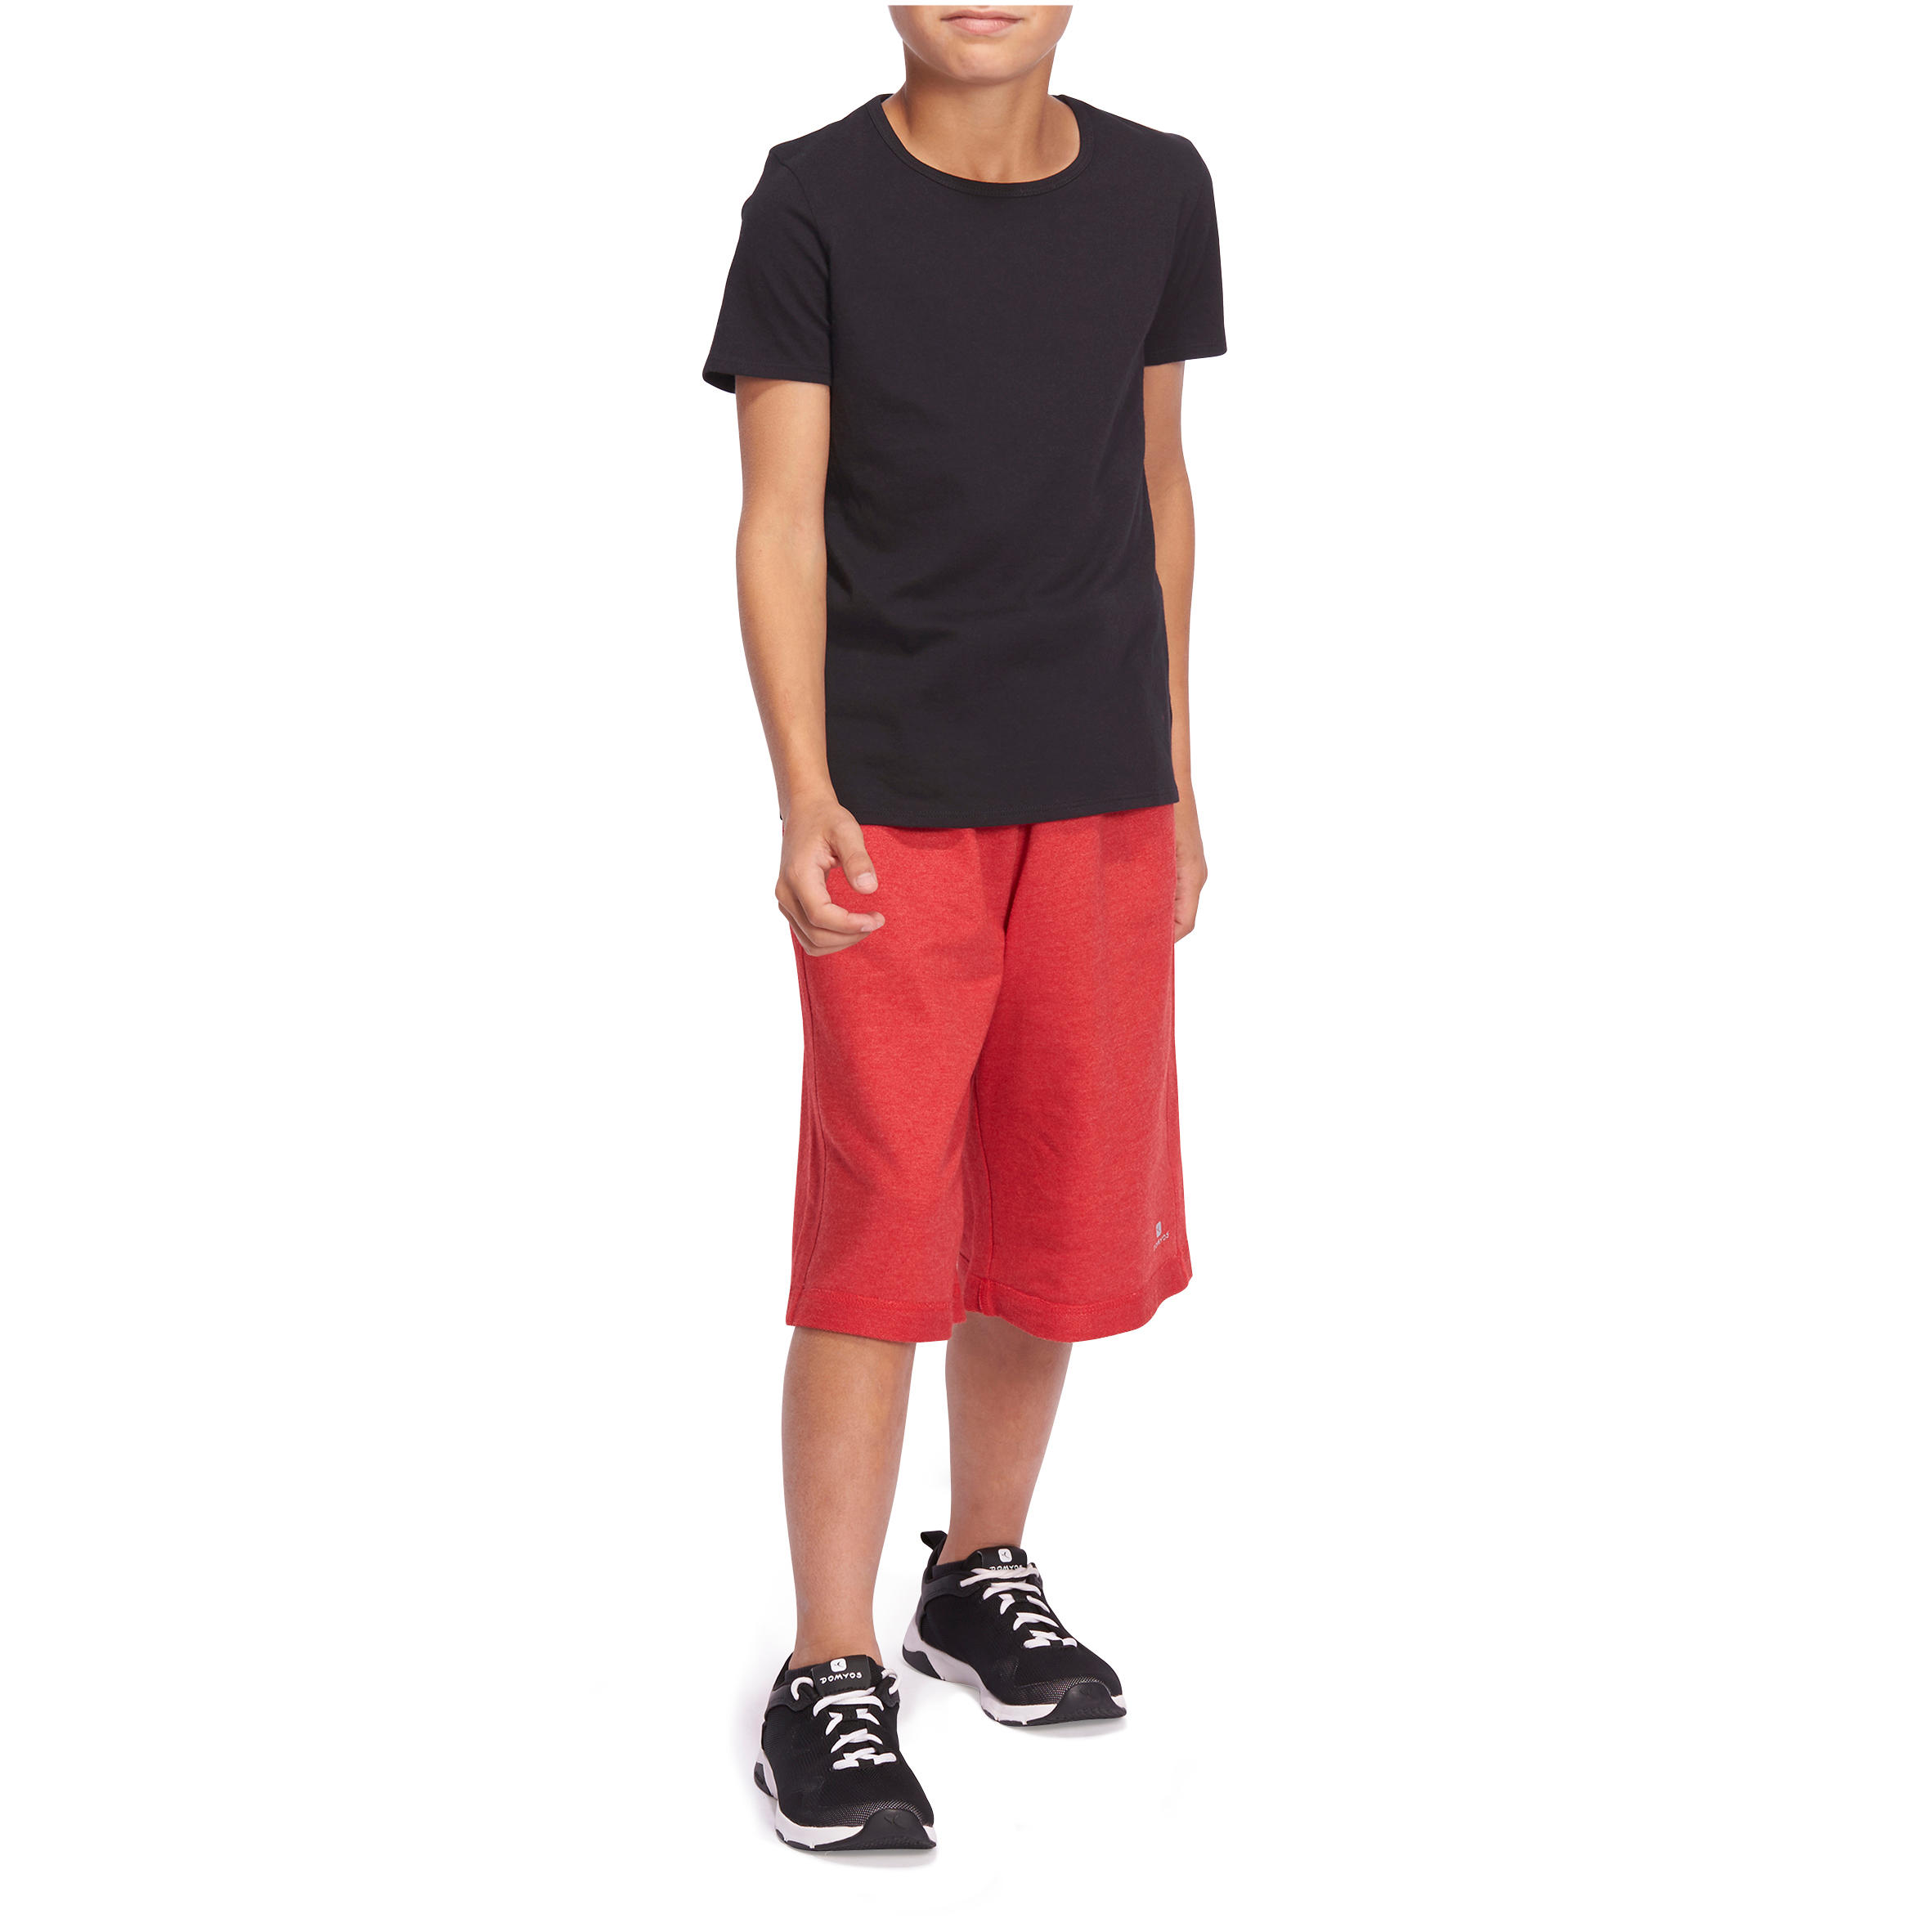 100 Boys' Short-Sleeved Gym T-Shirt - Black 3/8